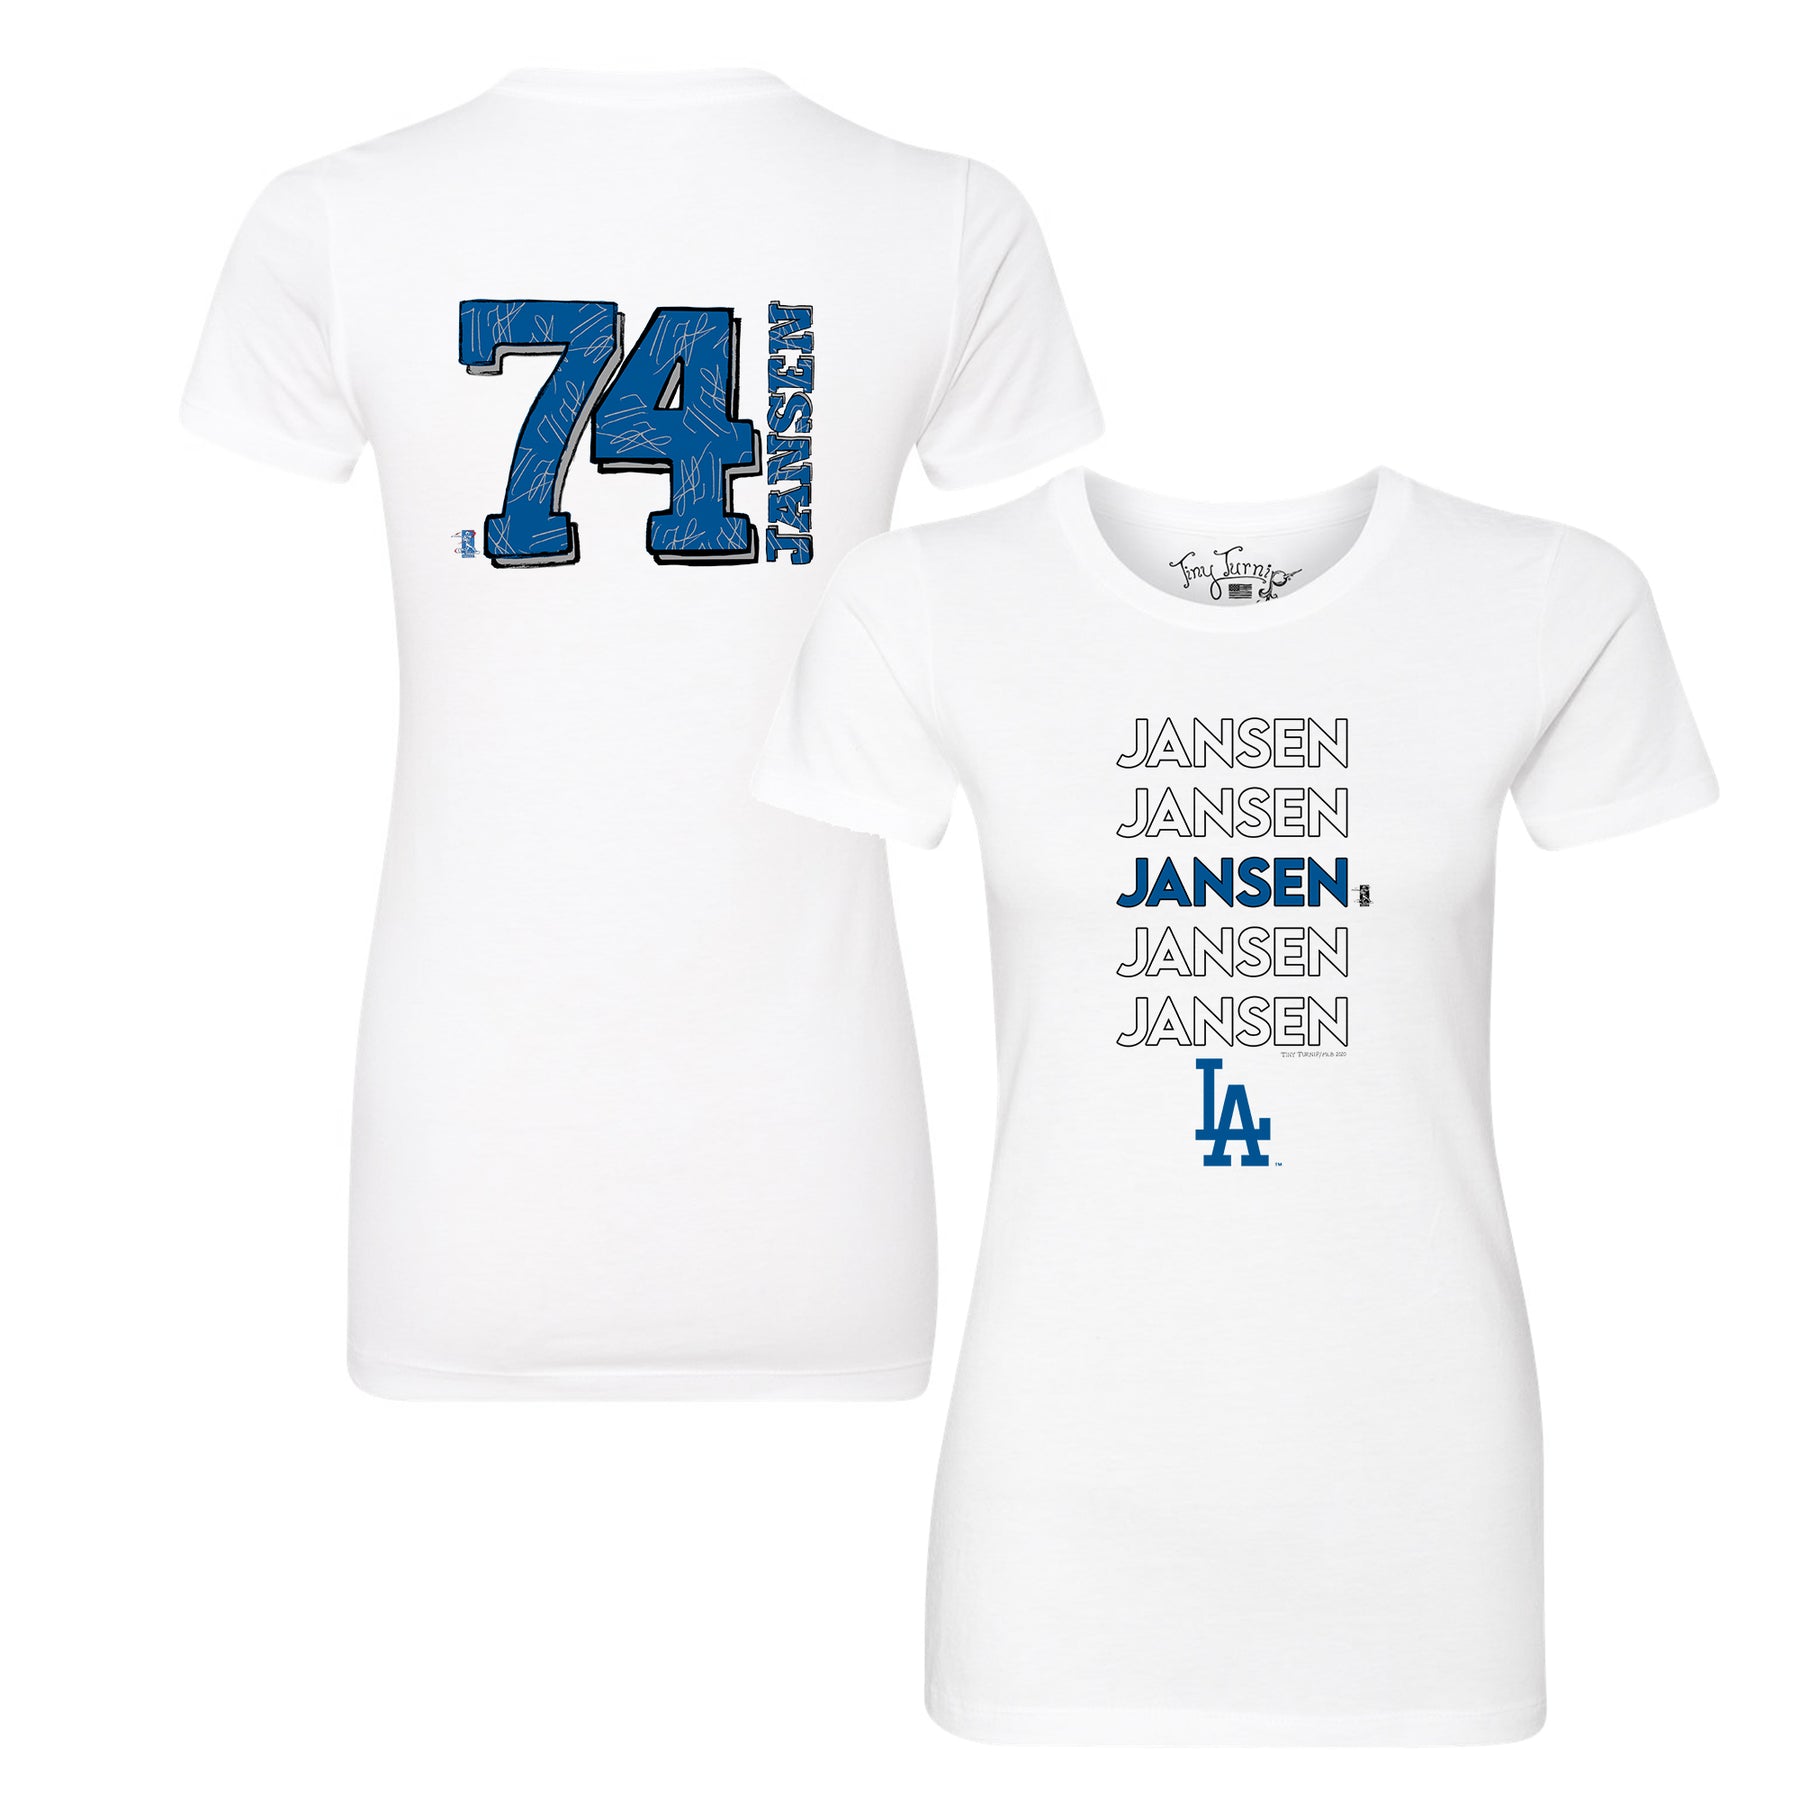 Official Women's Los Angeles Dodgers Gear, Womens Dodgers Apparel